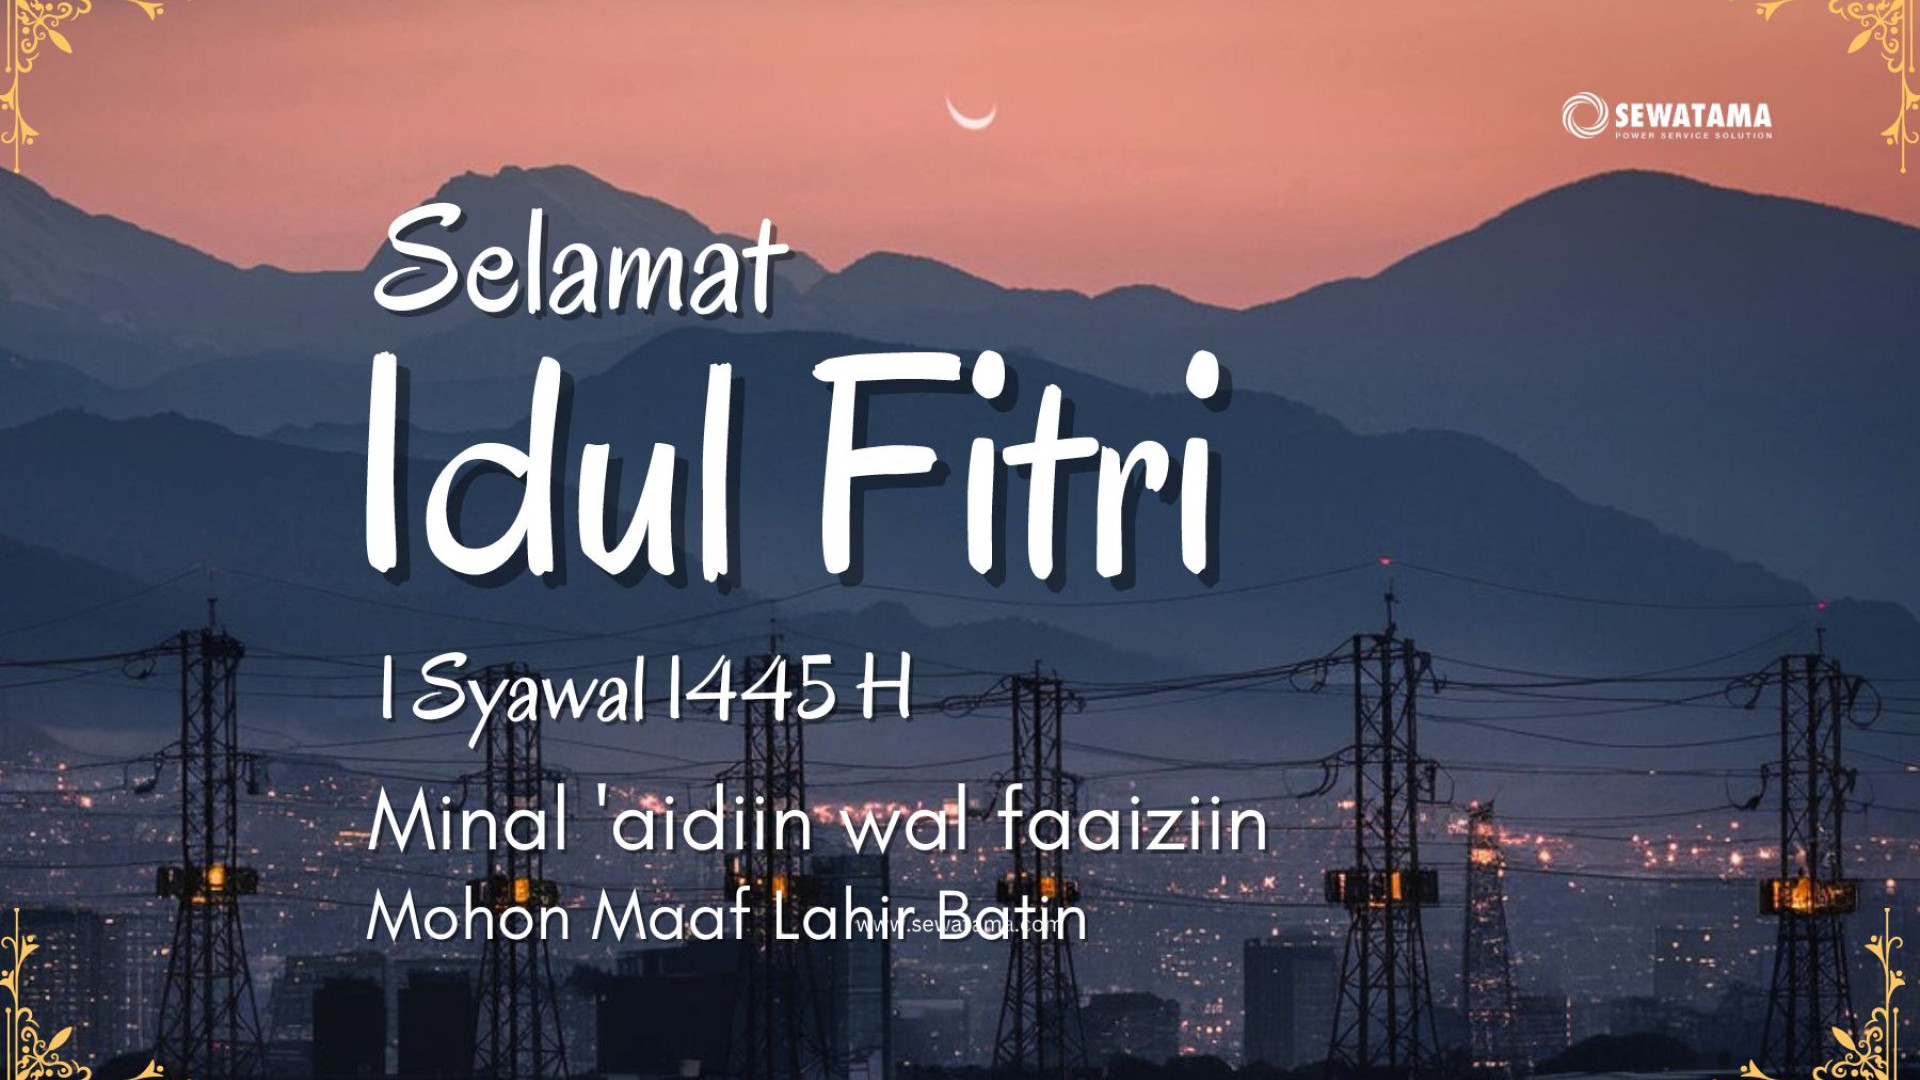 Selamat Idul Fitri 1445 H